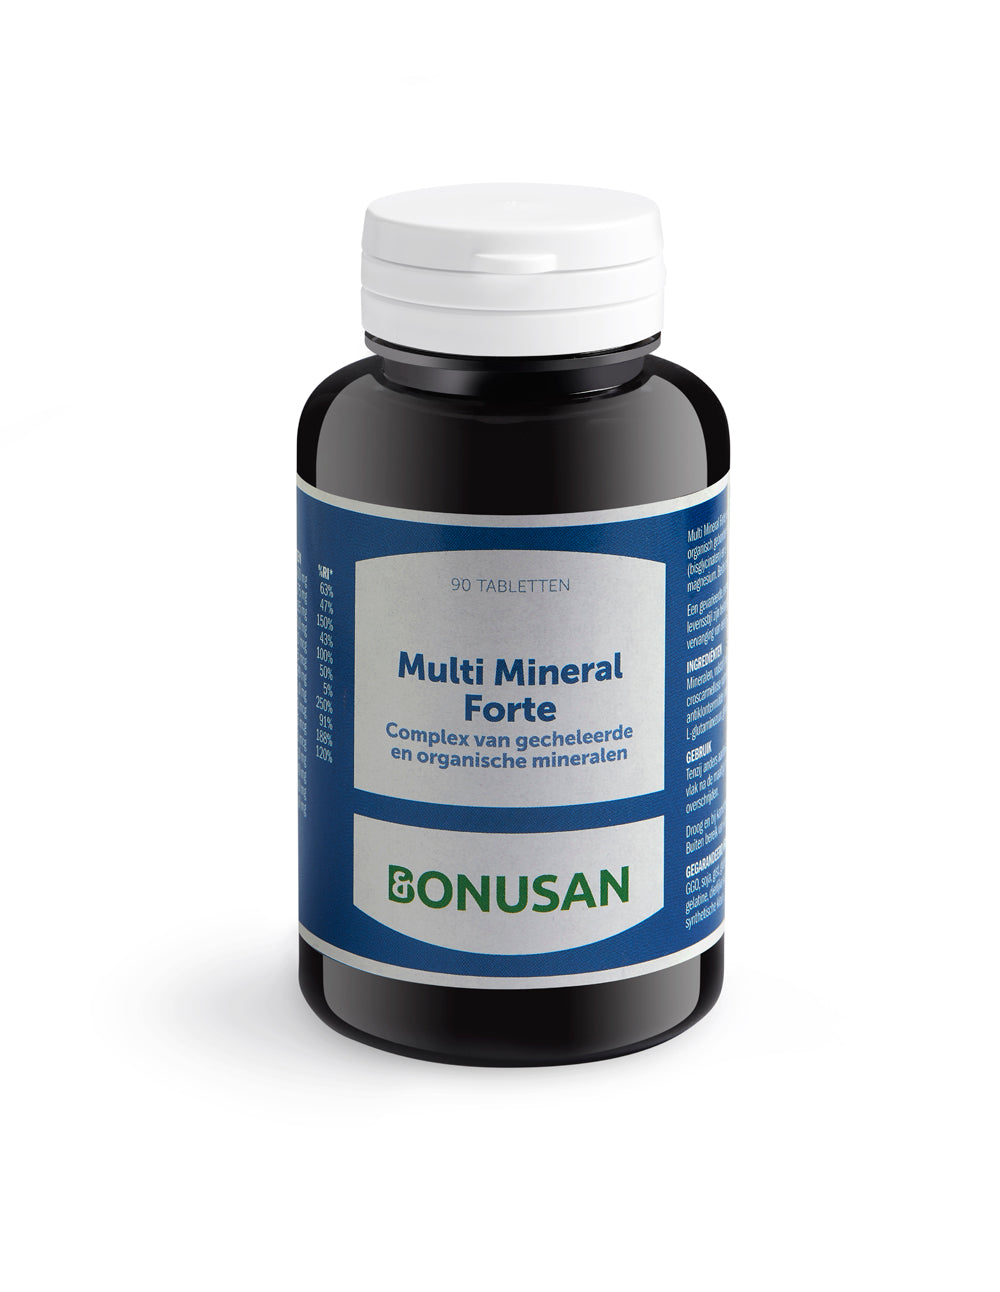 Multi Mineral Forte bonusan 90 tabletten